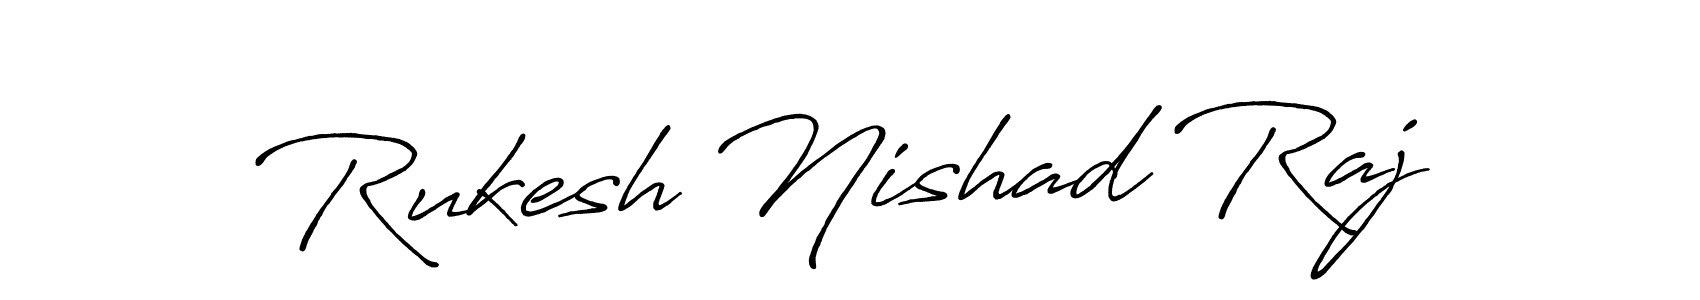 How to Draw Rukesh Nishad Raj signature style? Antro_Vectra_Bolder is a latest design signature styles for name Rukesh Nishad Raj. Rukesh Nishad Raj signature style 7 images and pictures png